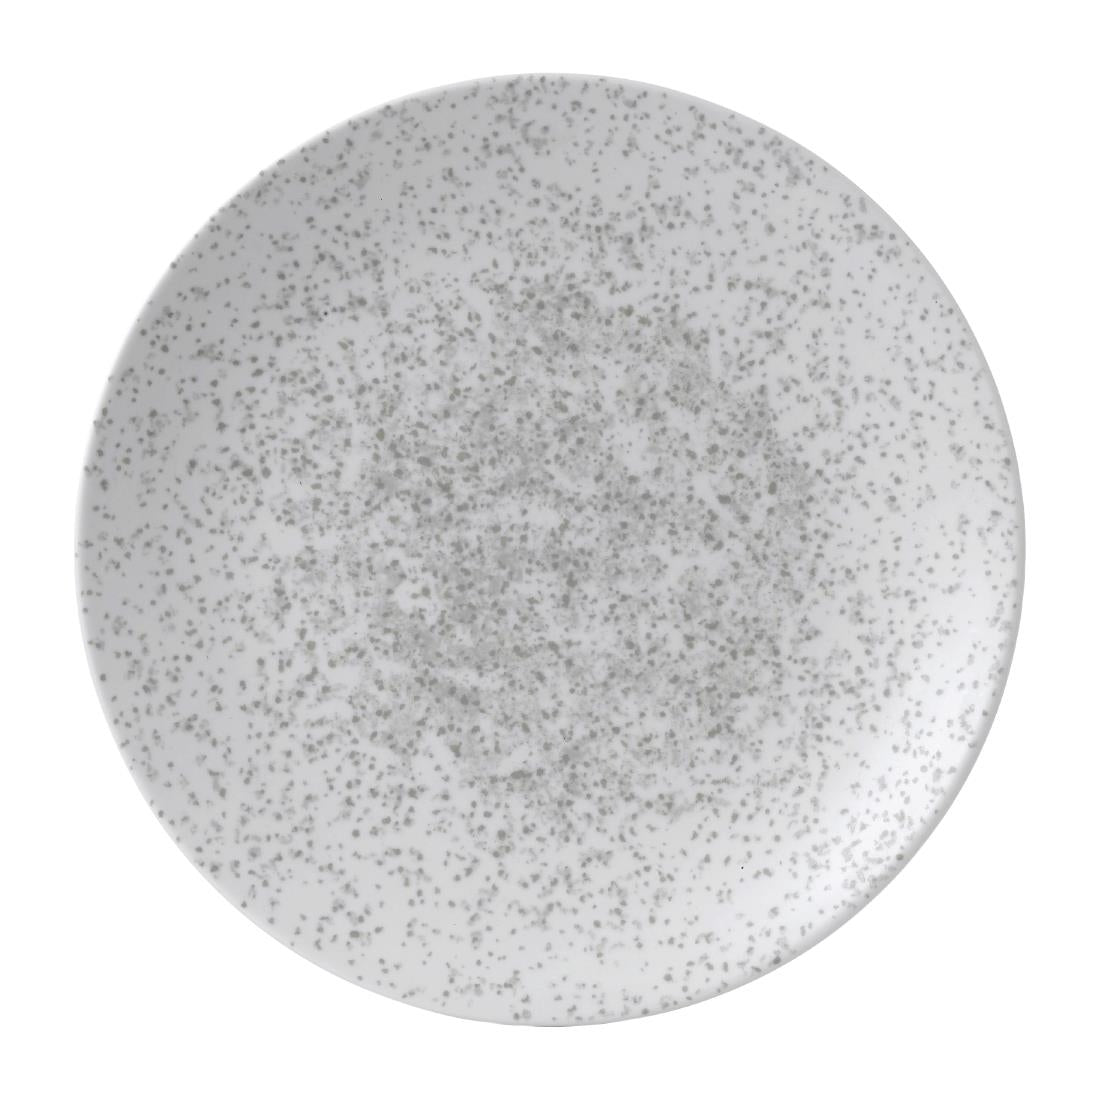 Churchill Art De Cuisine Menu Shades Coupe Plates Caldera Chalk White 289mm (Pack of 6)